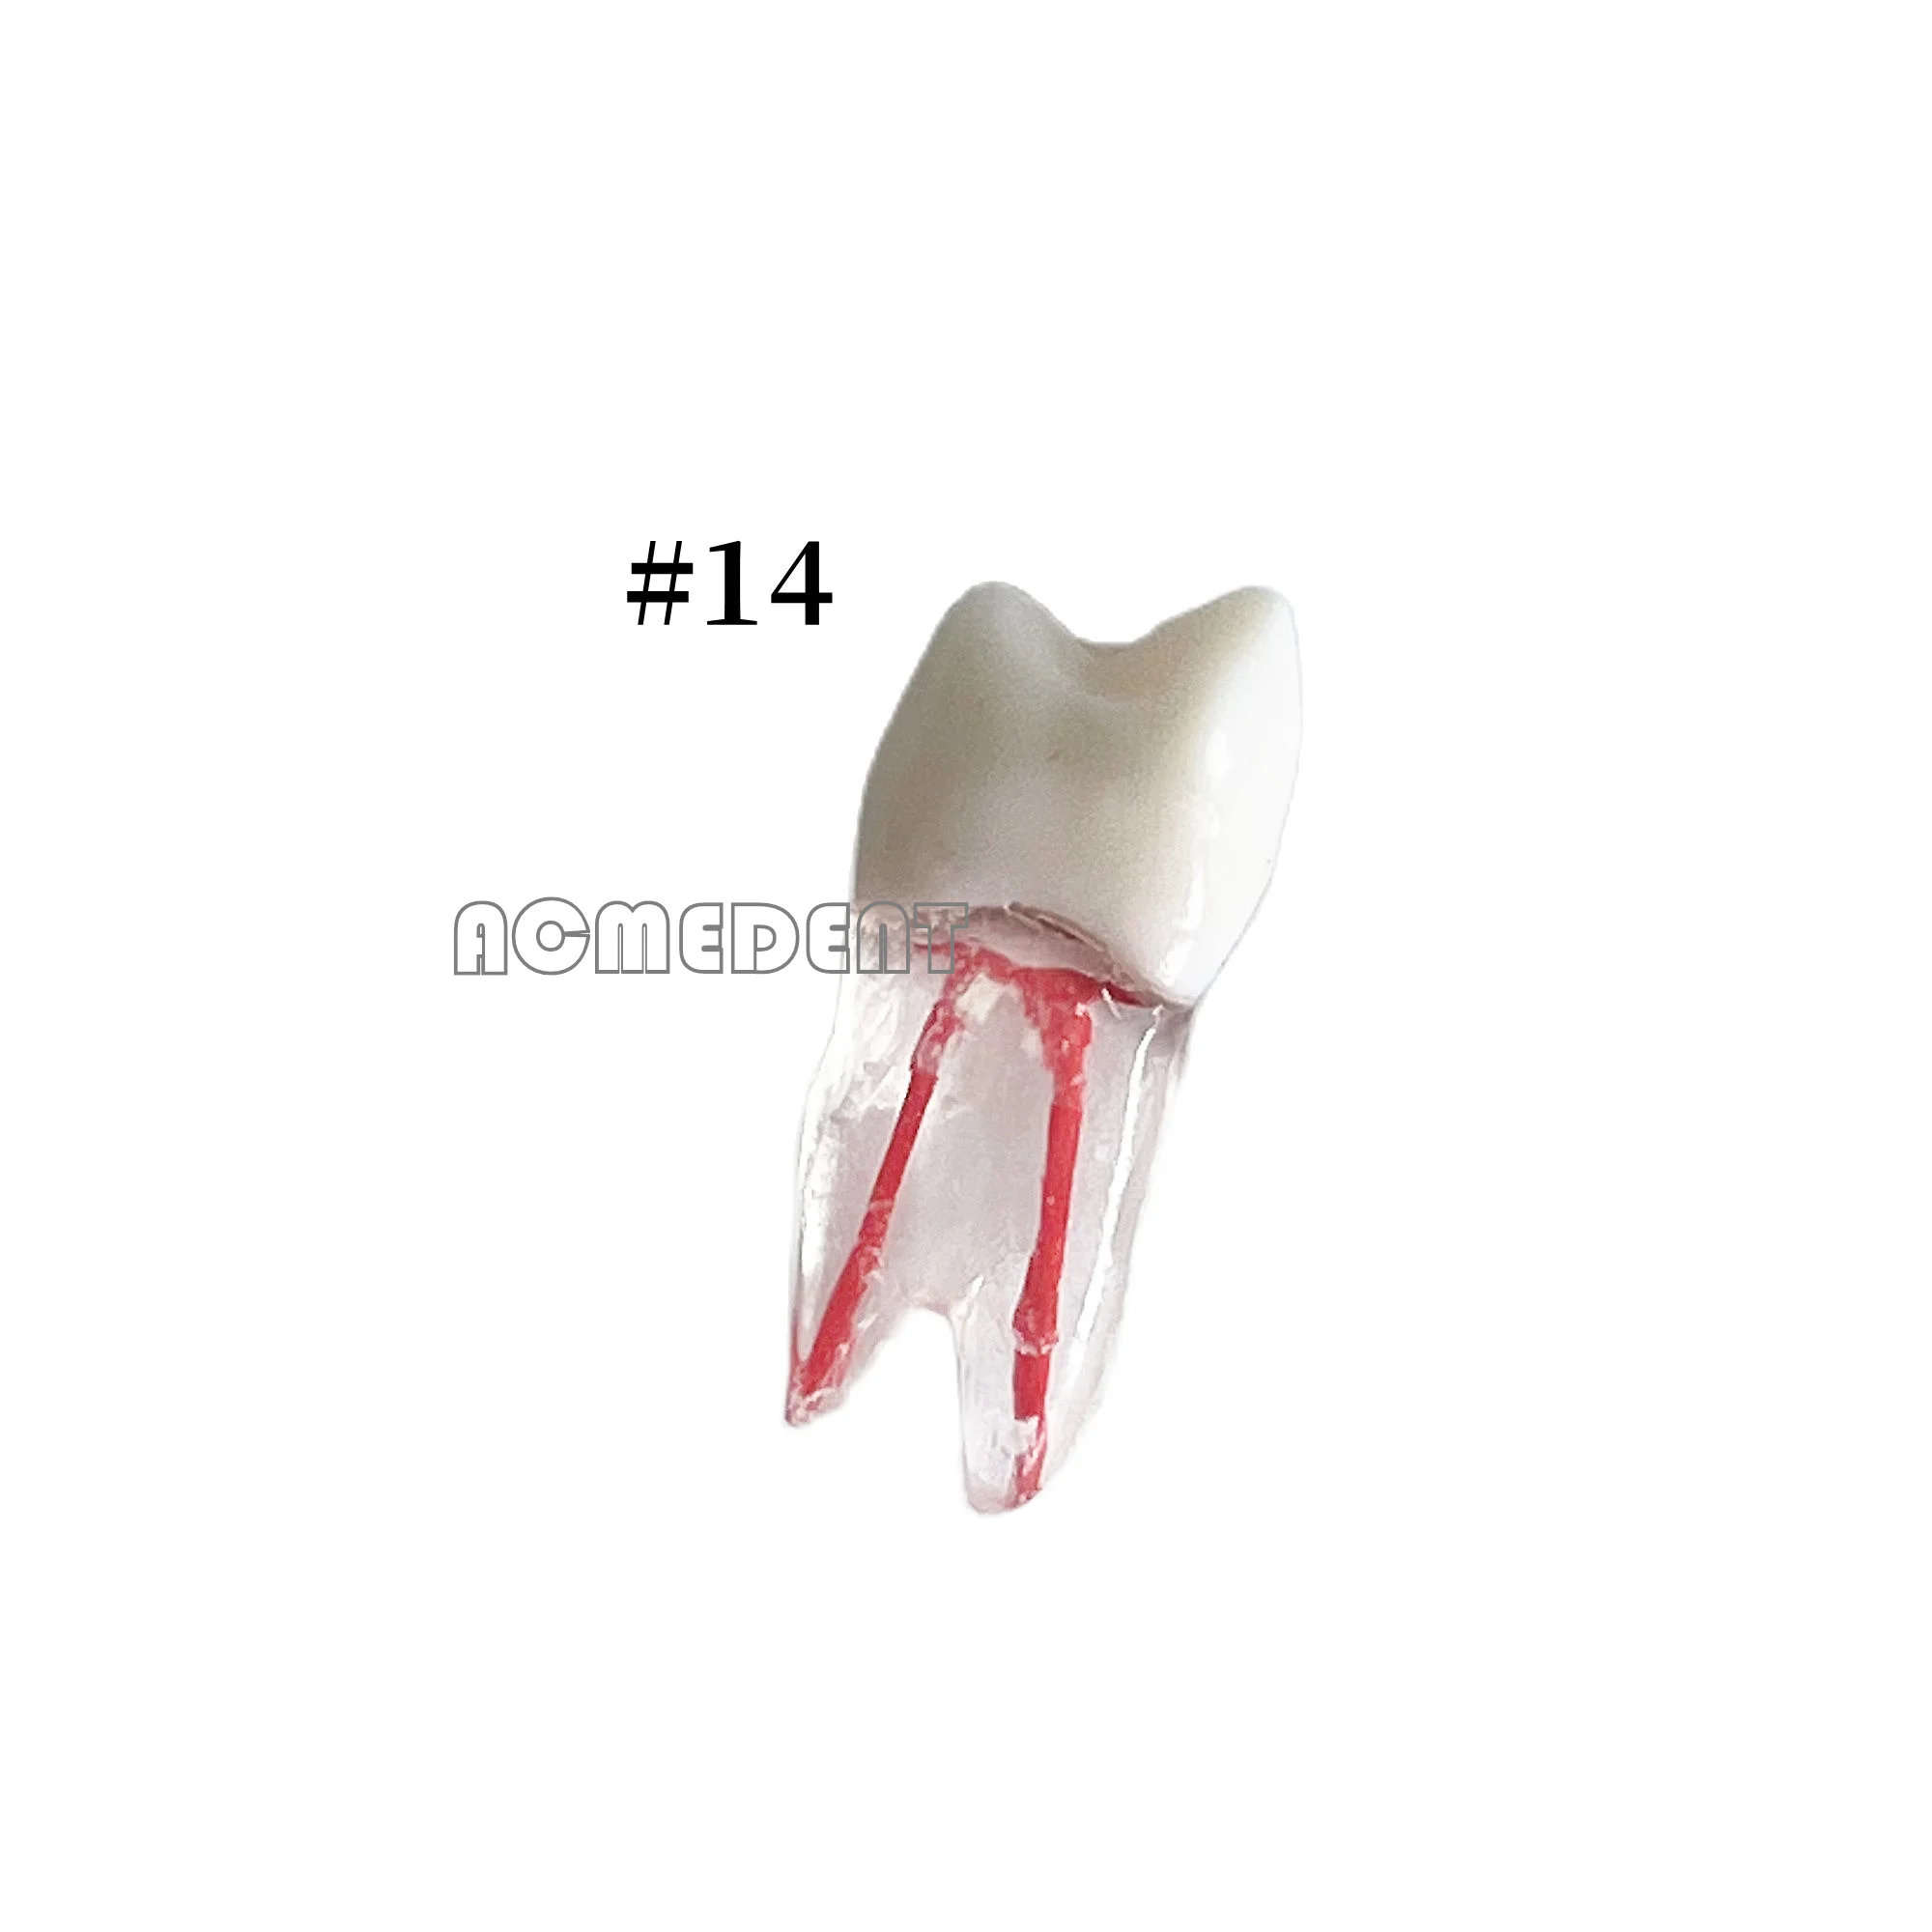 

1~50pcs Dental Teeth Study Model Endodontic Rotary Files Typodont Practice Root Canal Pulp Cavity Endo RCT Training Blocks NO.14